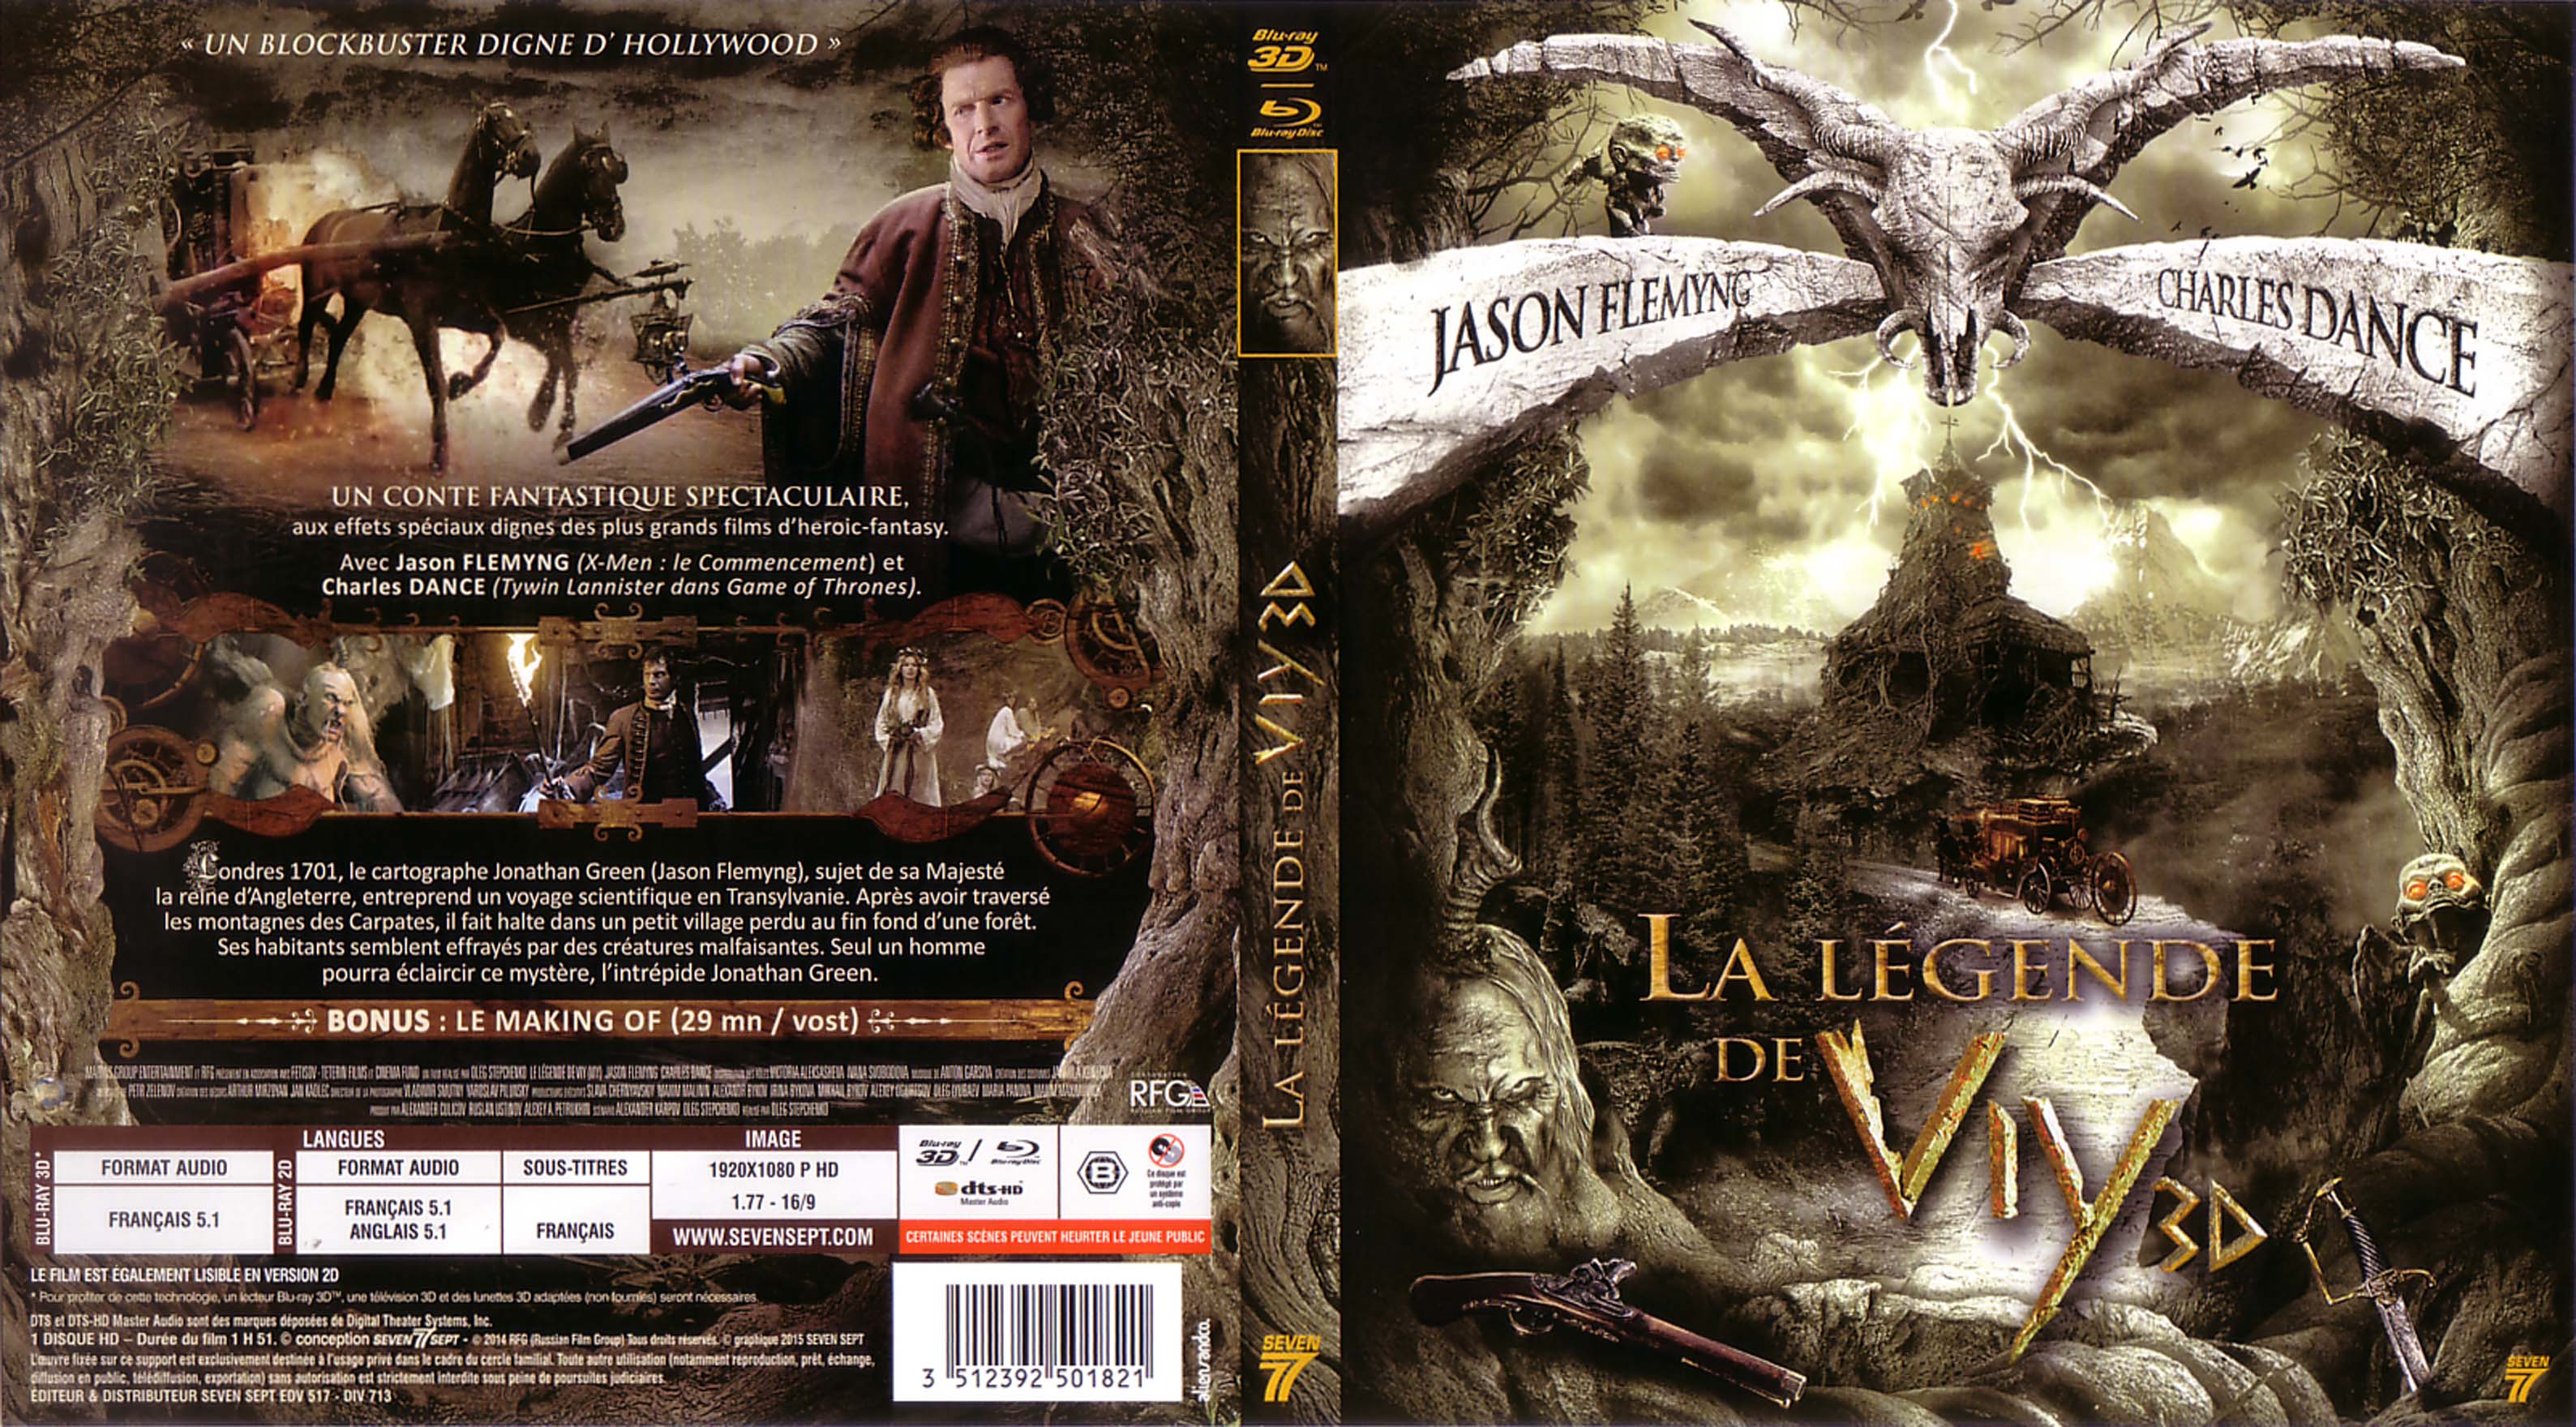 Jaquette DVD Legende de Viy 3D (BLU-RAY)